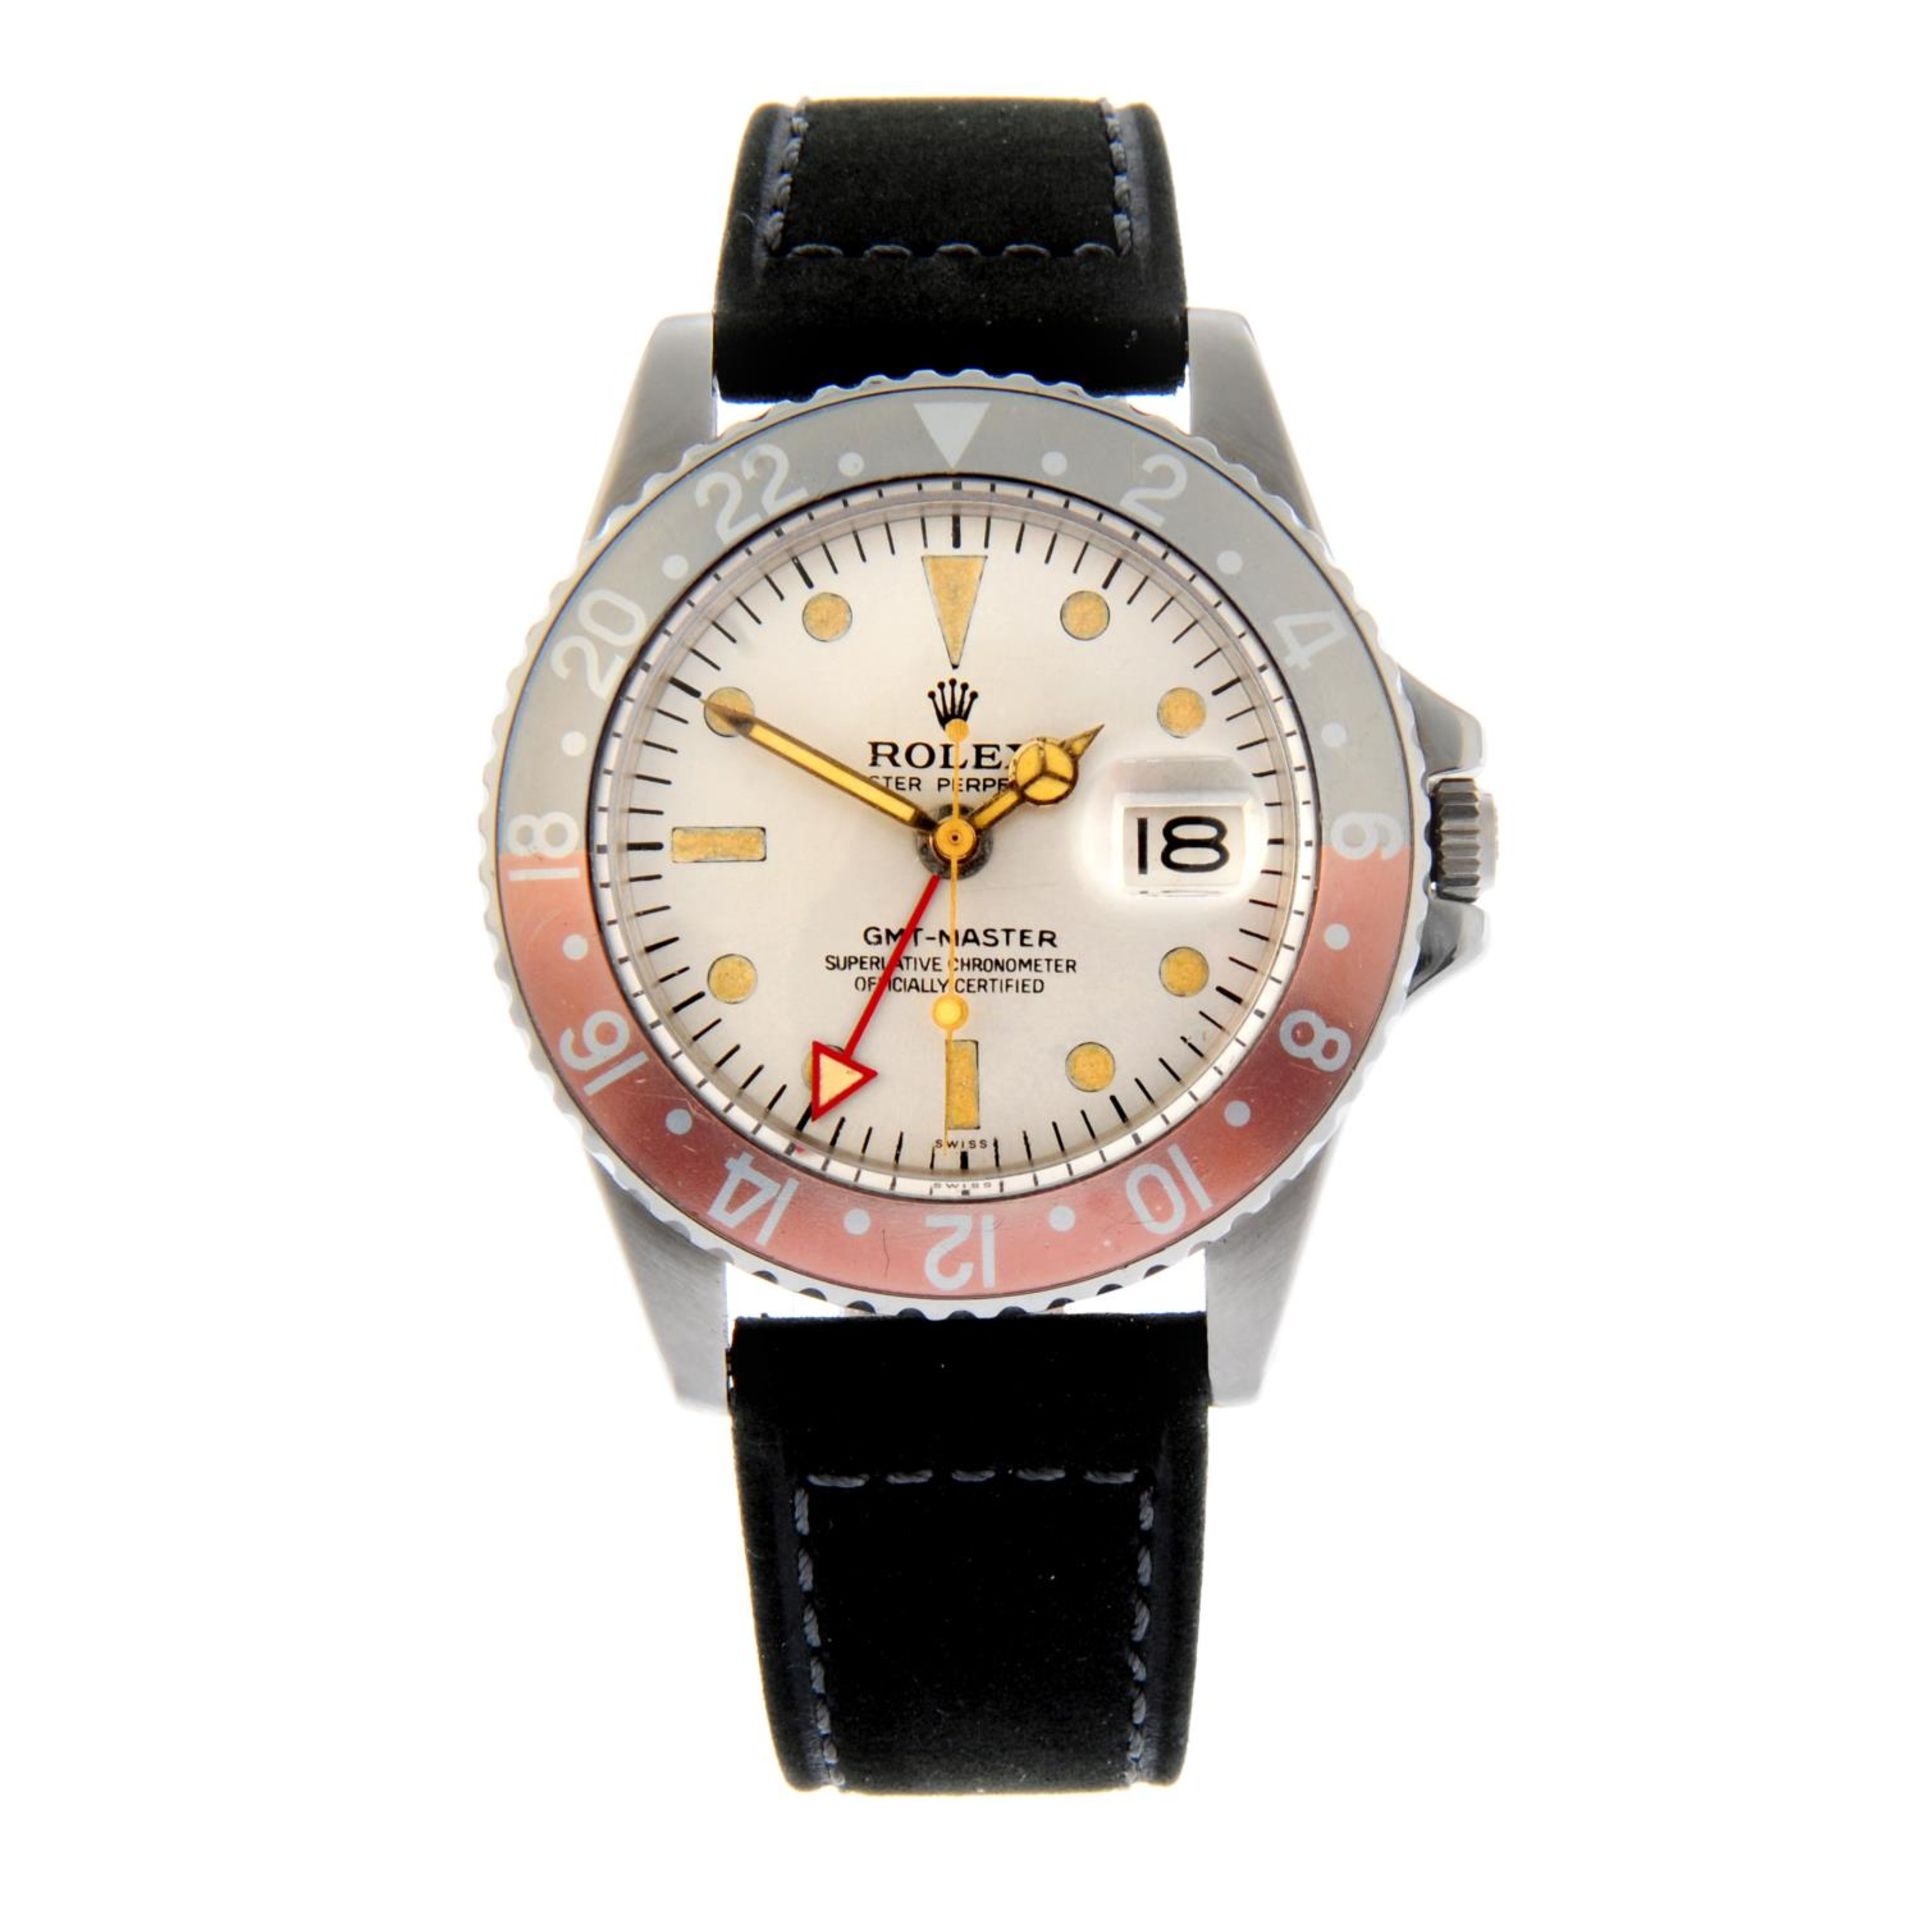 ROLEX - an Oyster Perpetual GMT-Master wrist watch.